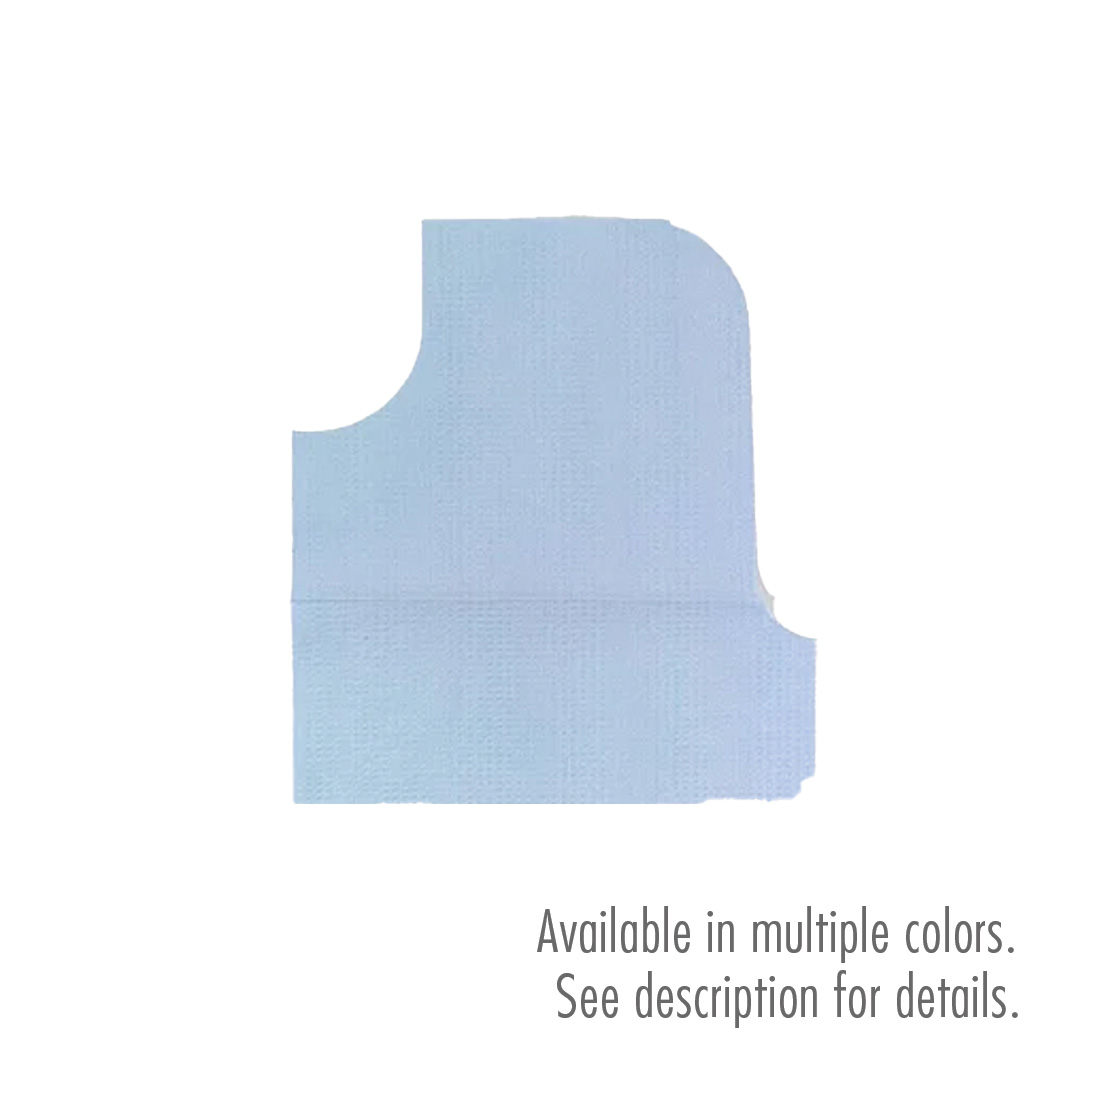 Prophy Bib Contour Neck Tissue/Poly/Tissue 3Ply 29" x 21" Blue - 100/Case